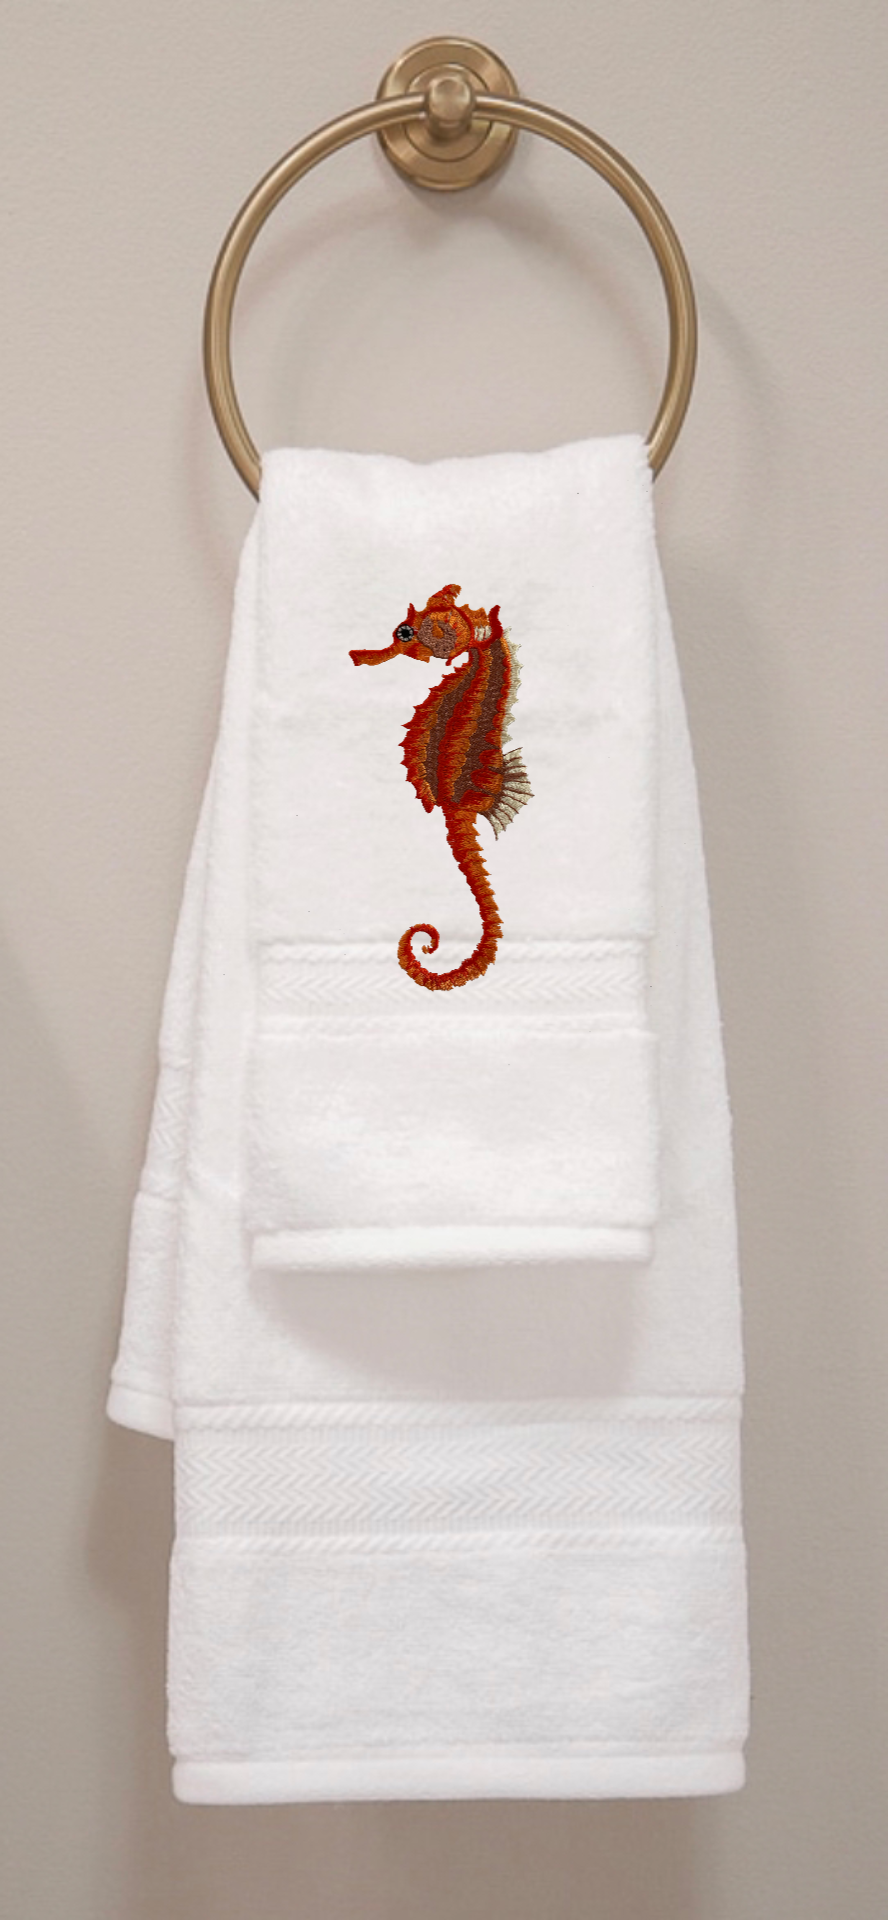 Bath and Hand Towels — The Horseshoe Crab